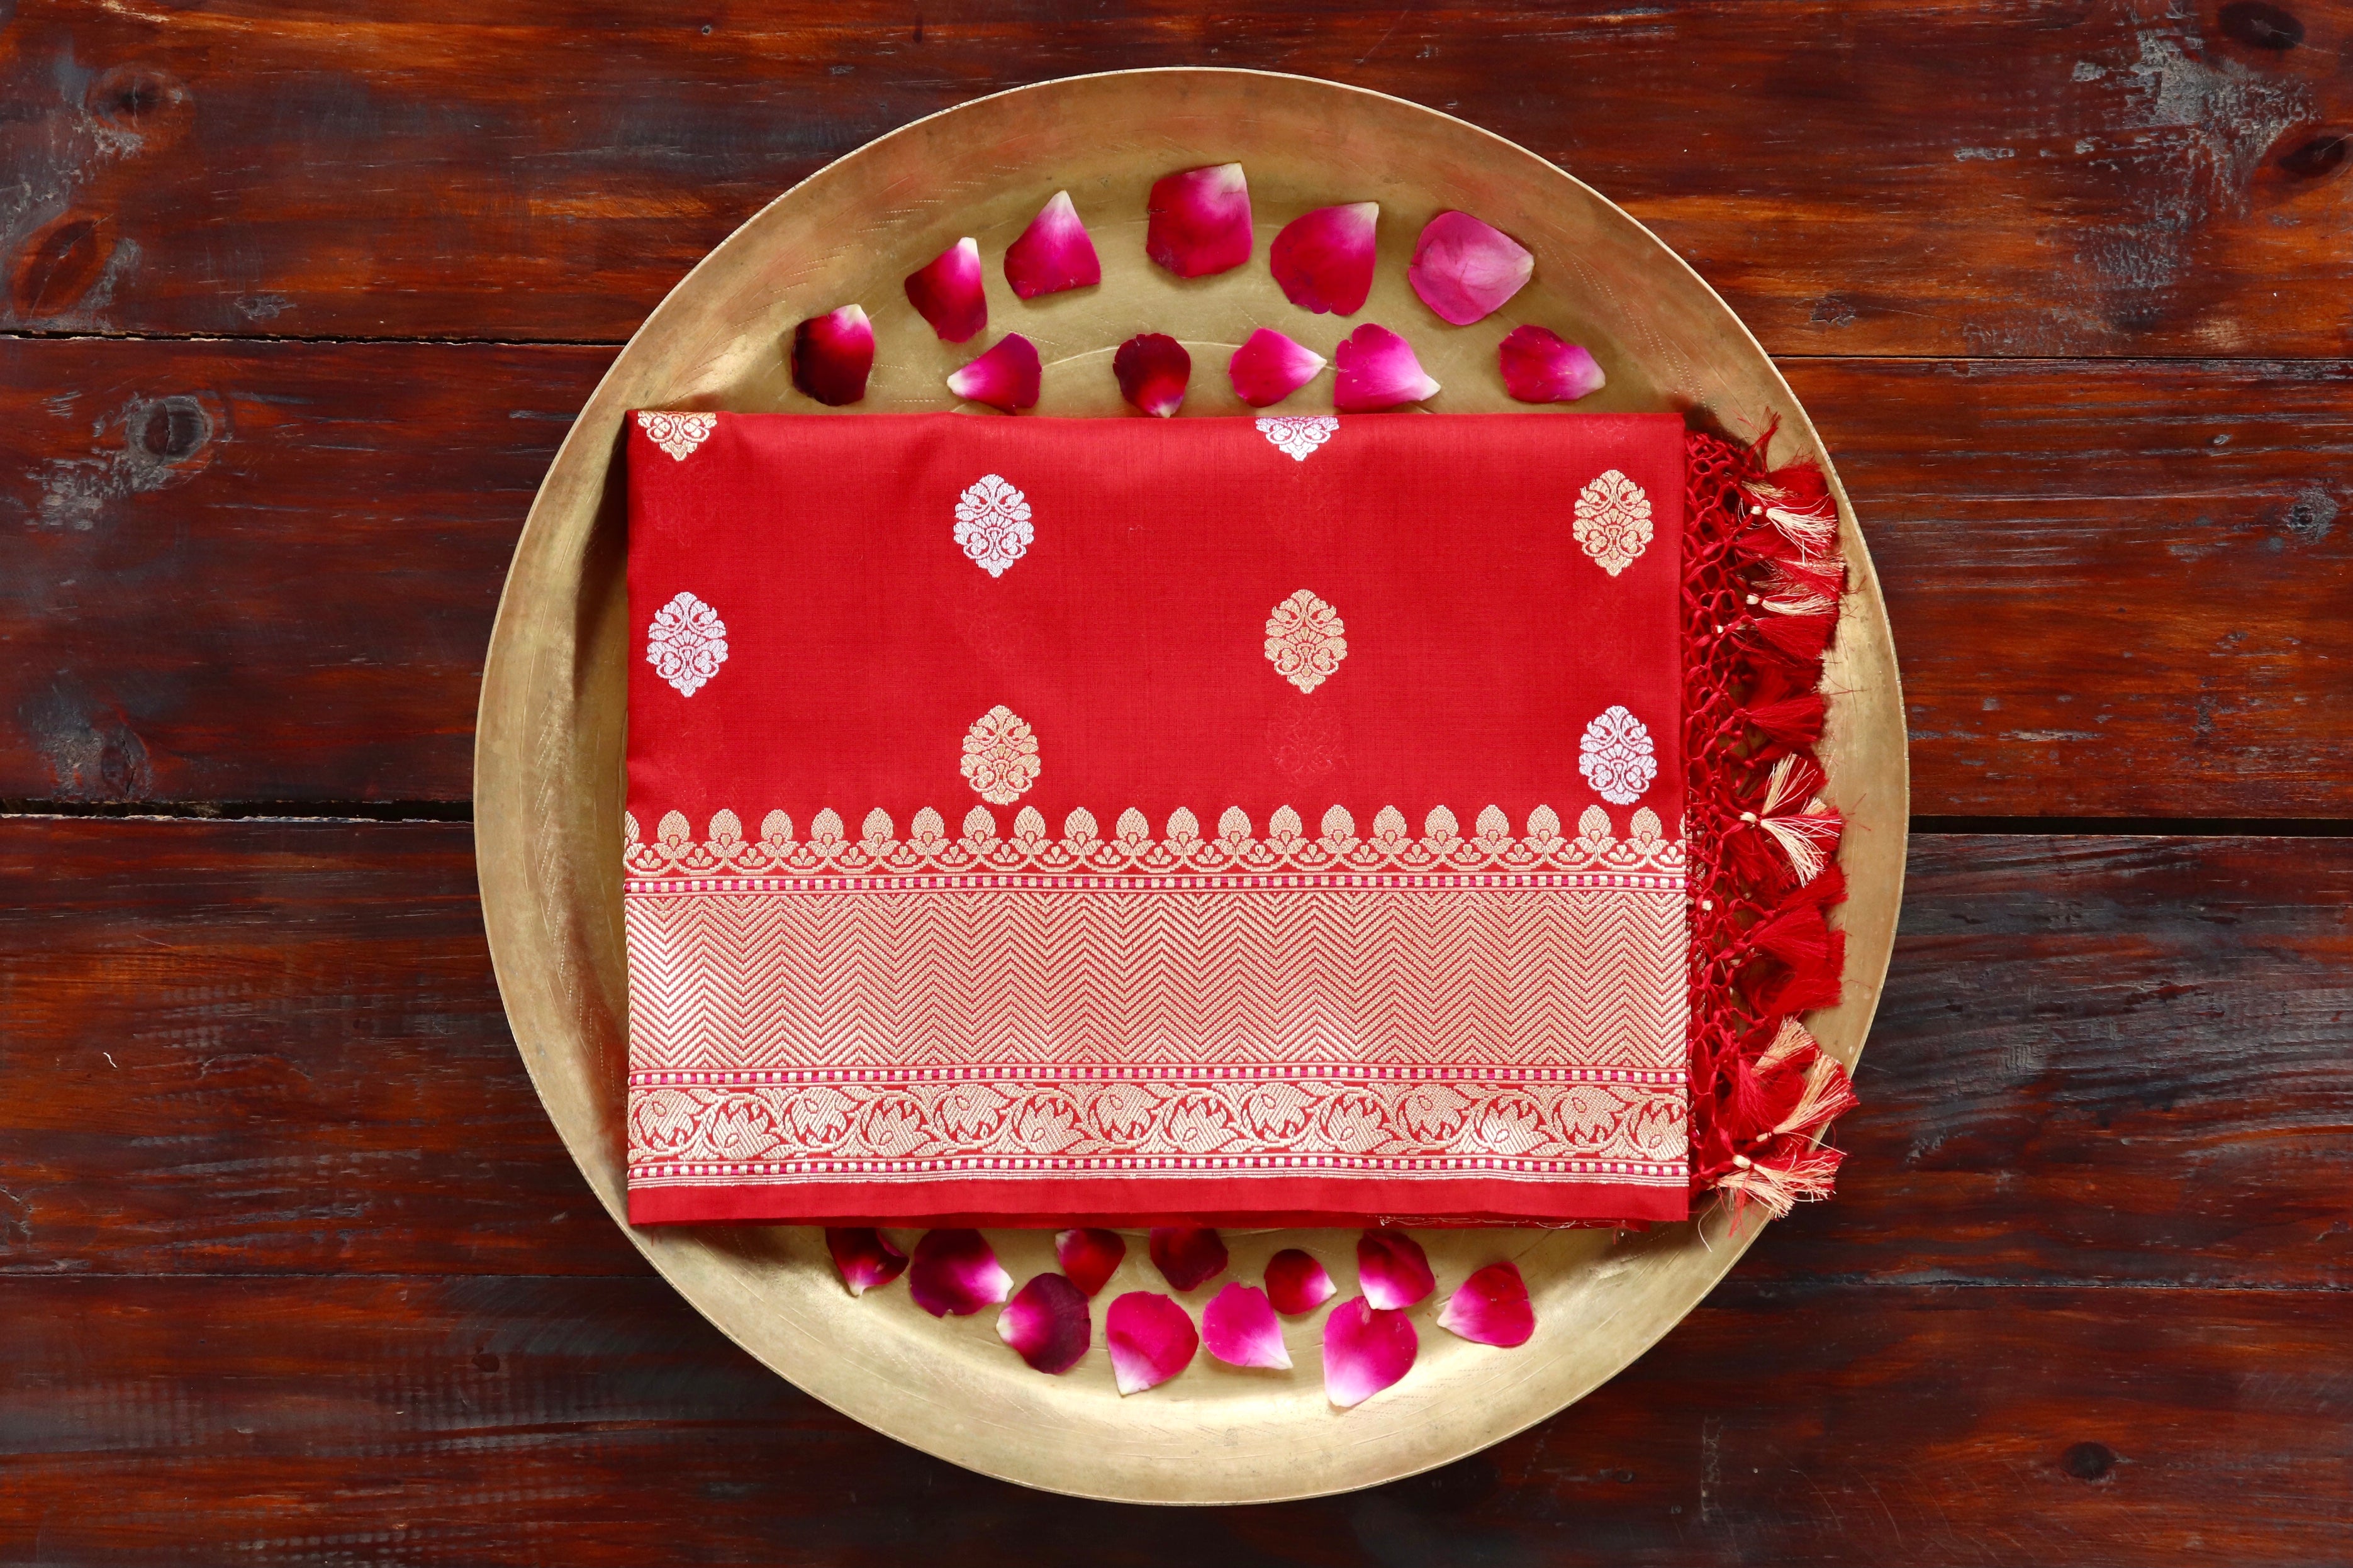 Red Kadhua Pure Silk Handloom Banarasi Dupatta